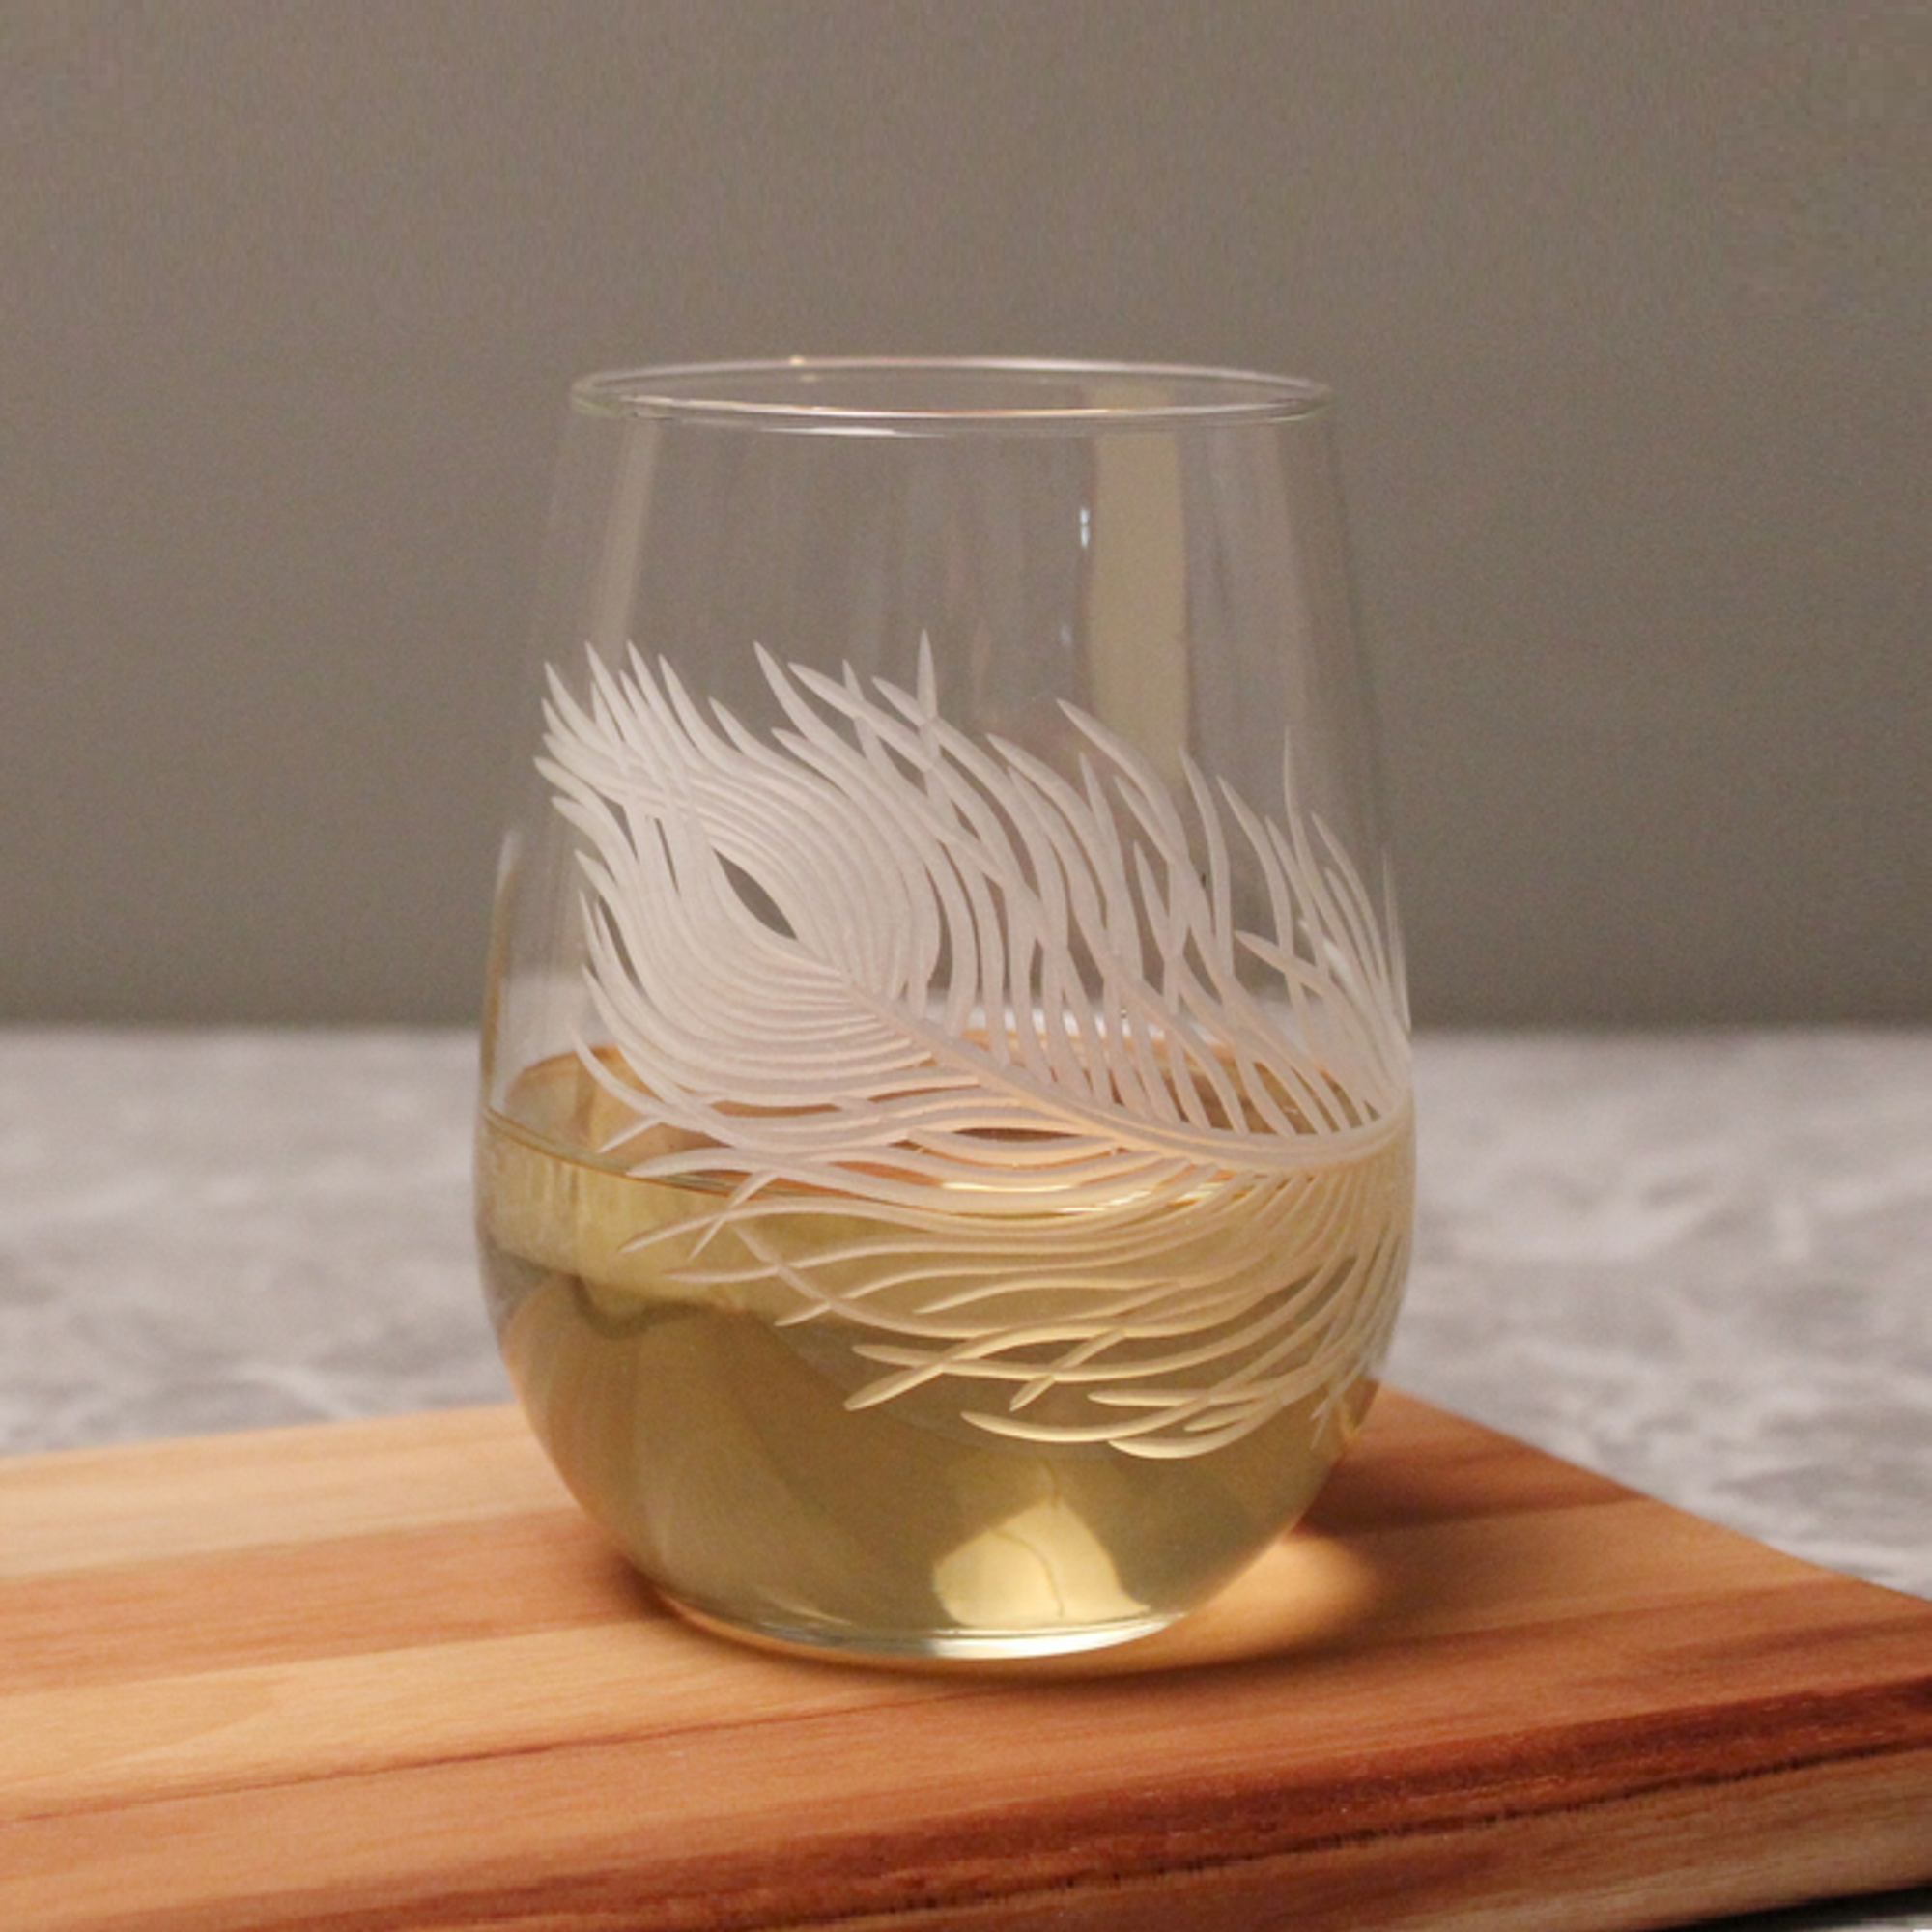 Gold Leopard Print Stemless Wine Glasses, Set of 4